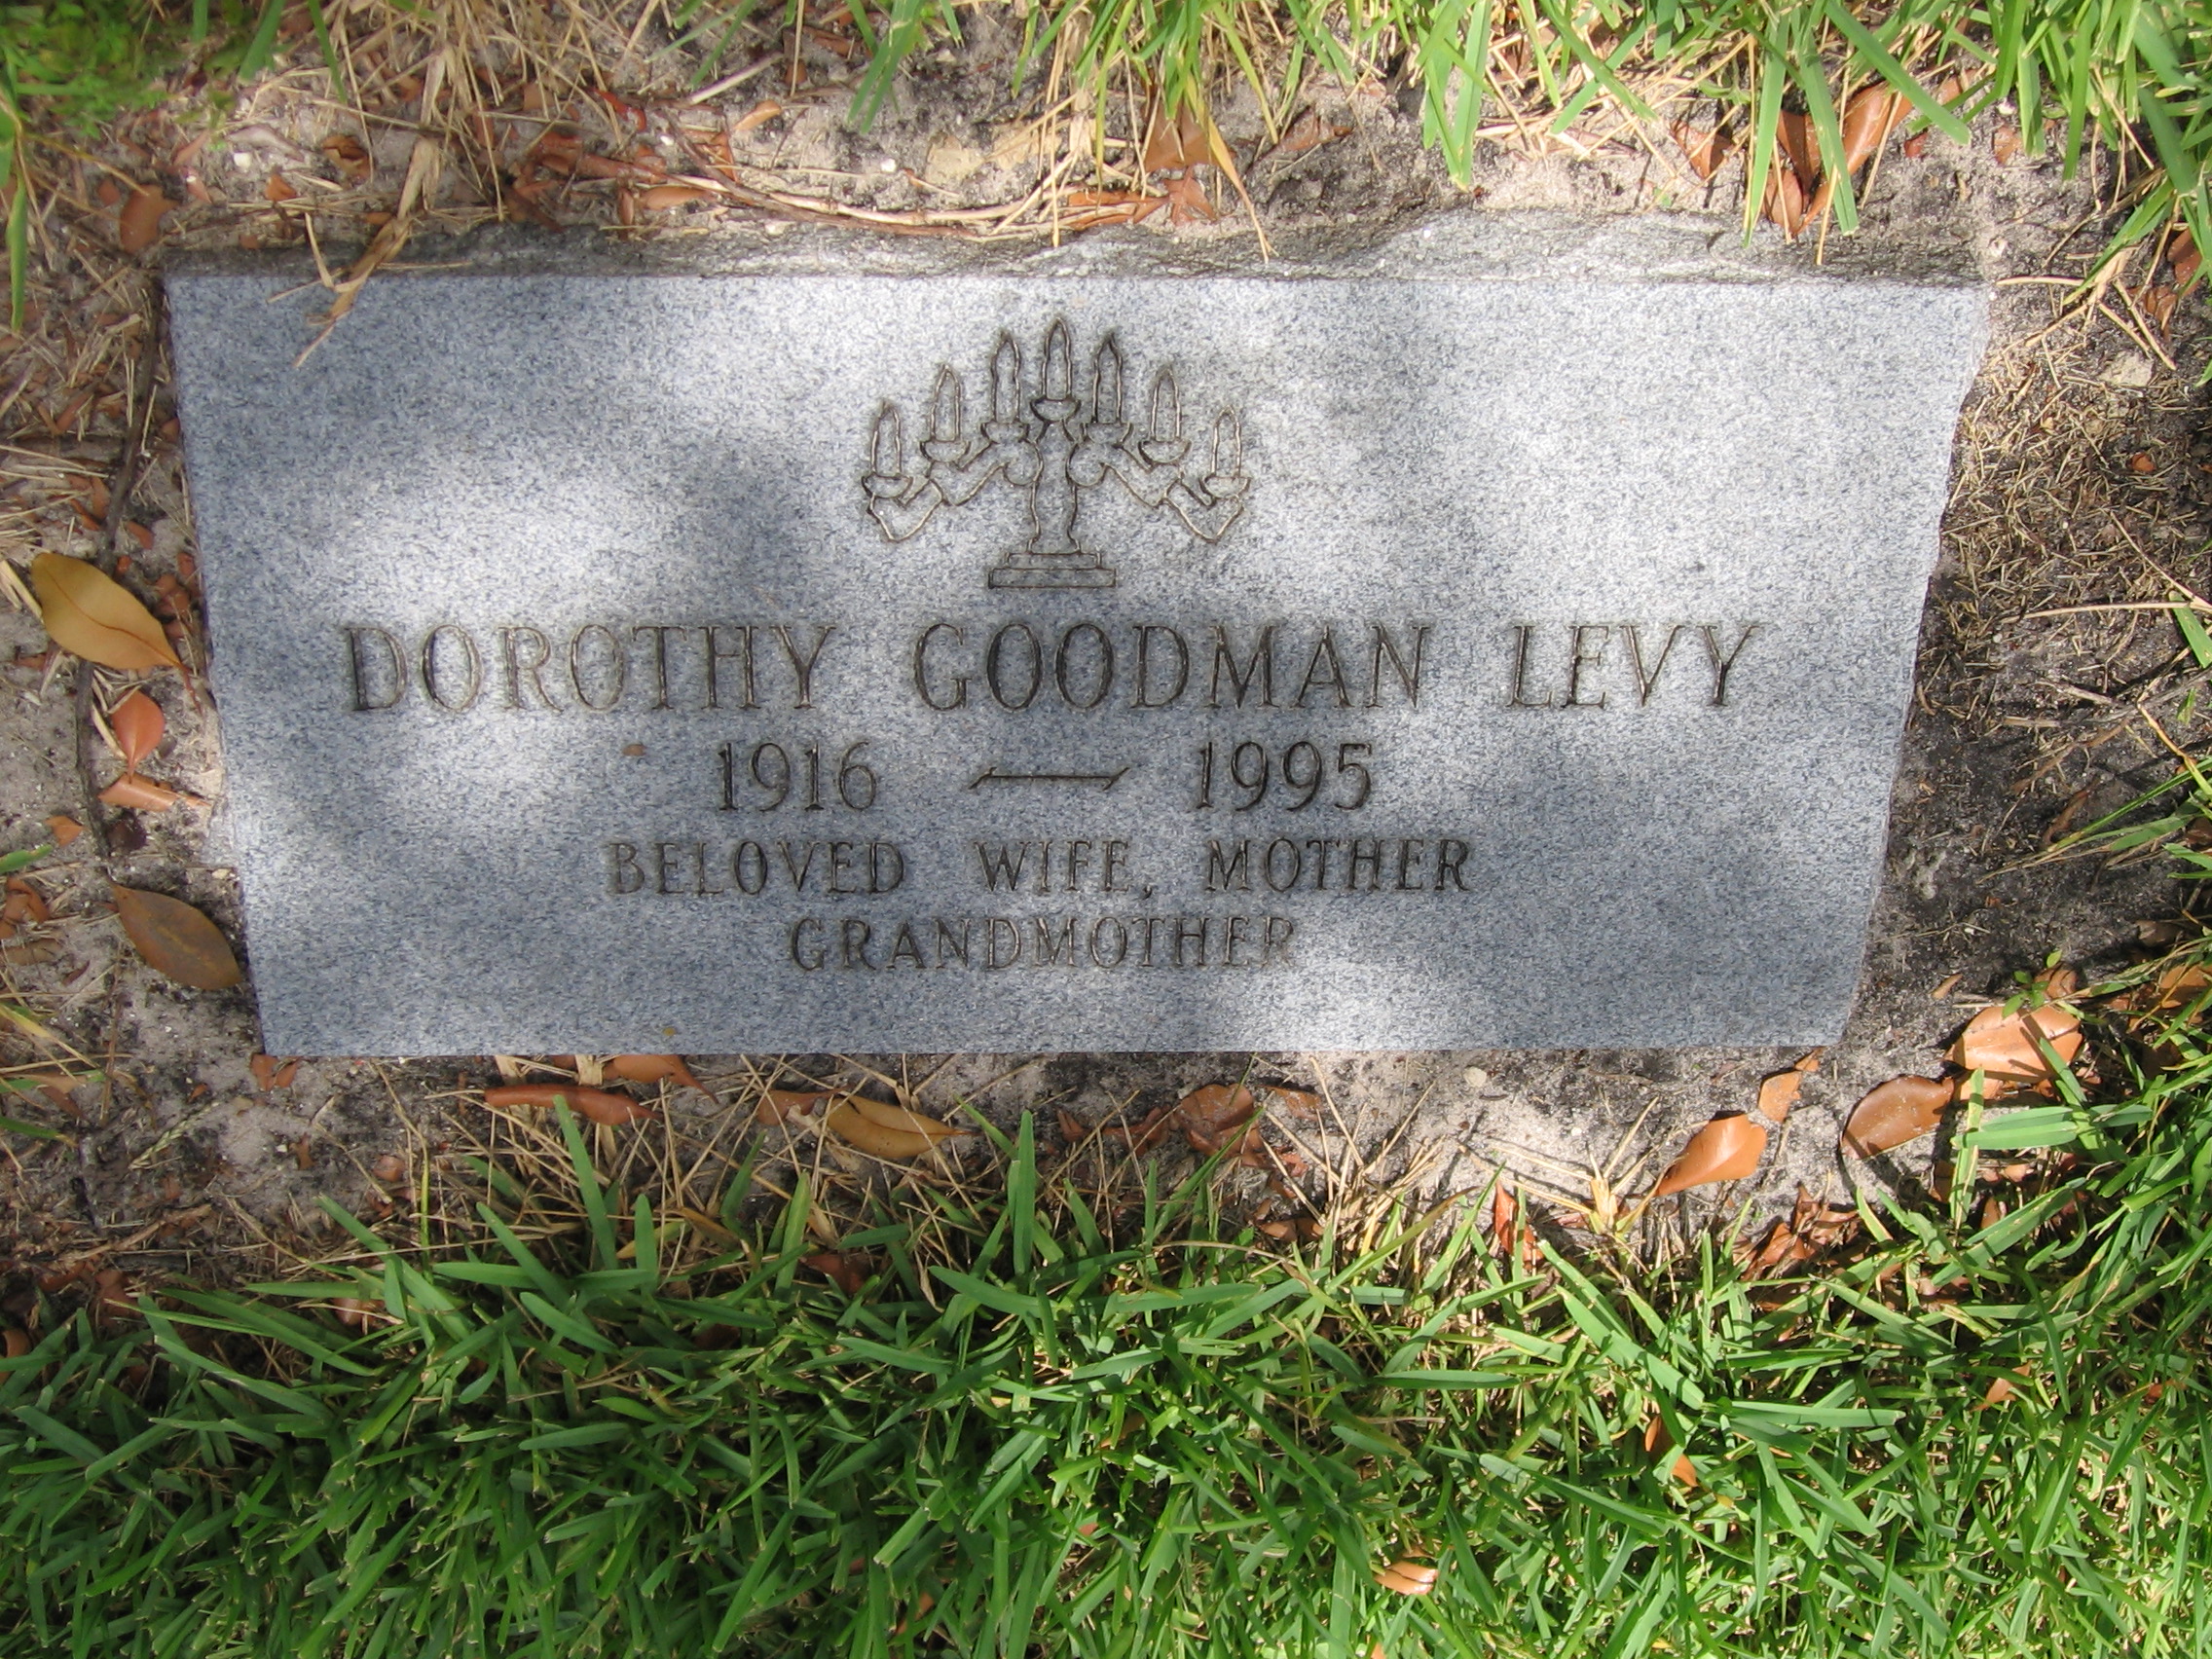 Dorothy Goodman Levy